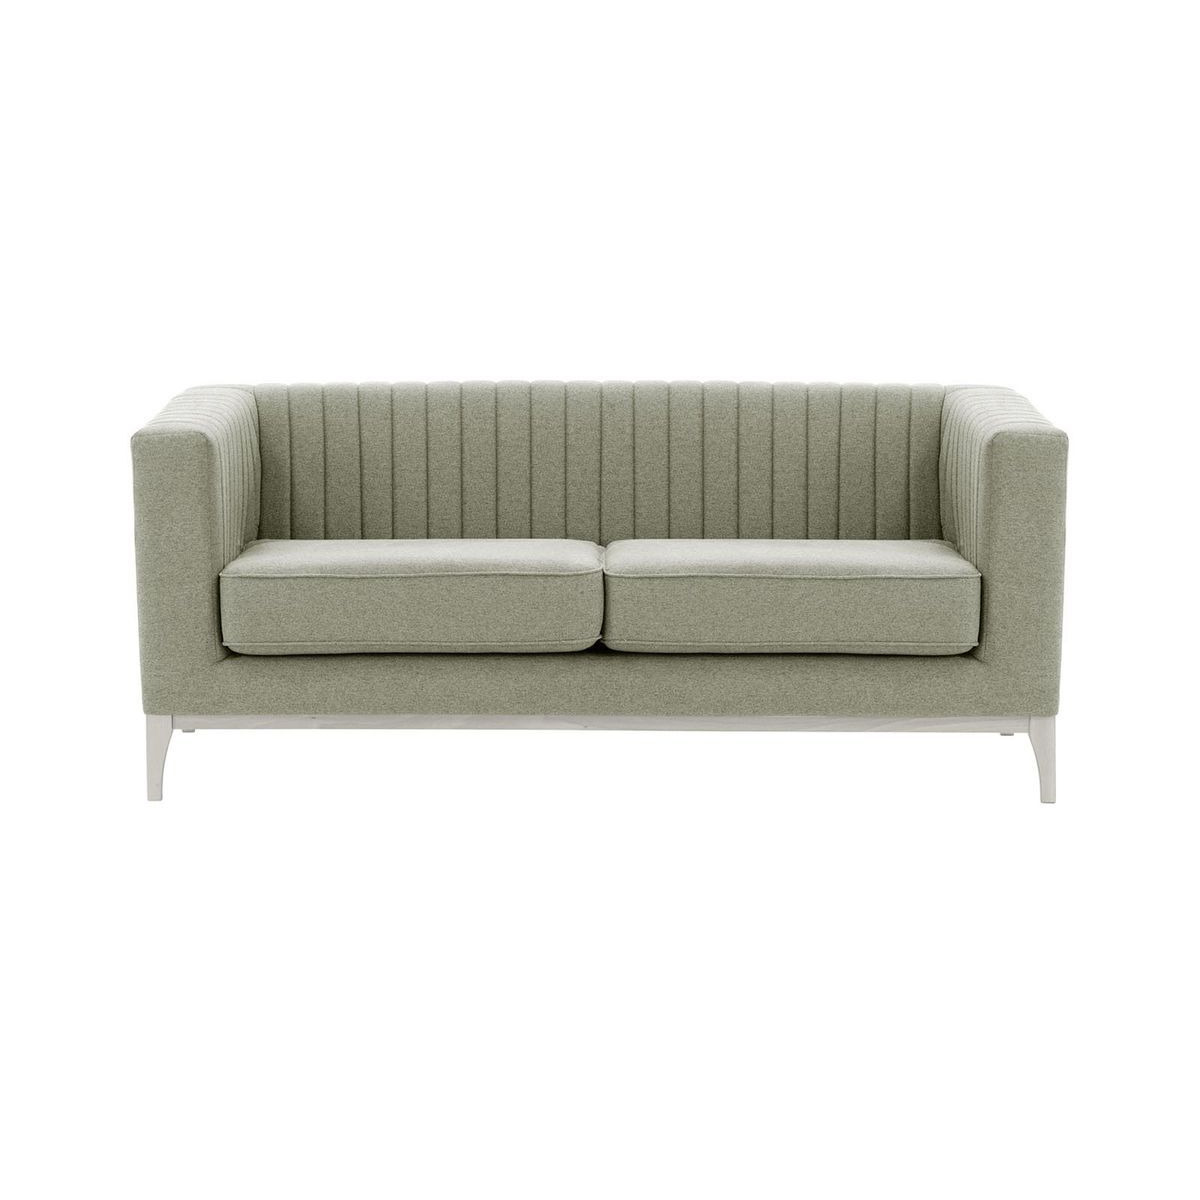 Slender Wood 2 Seater Sofa, grey, Leg colour: white - image 1